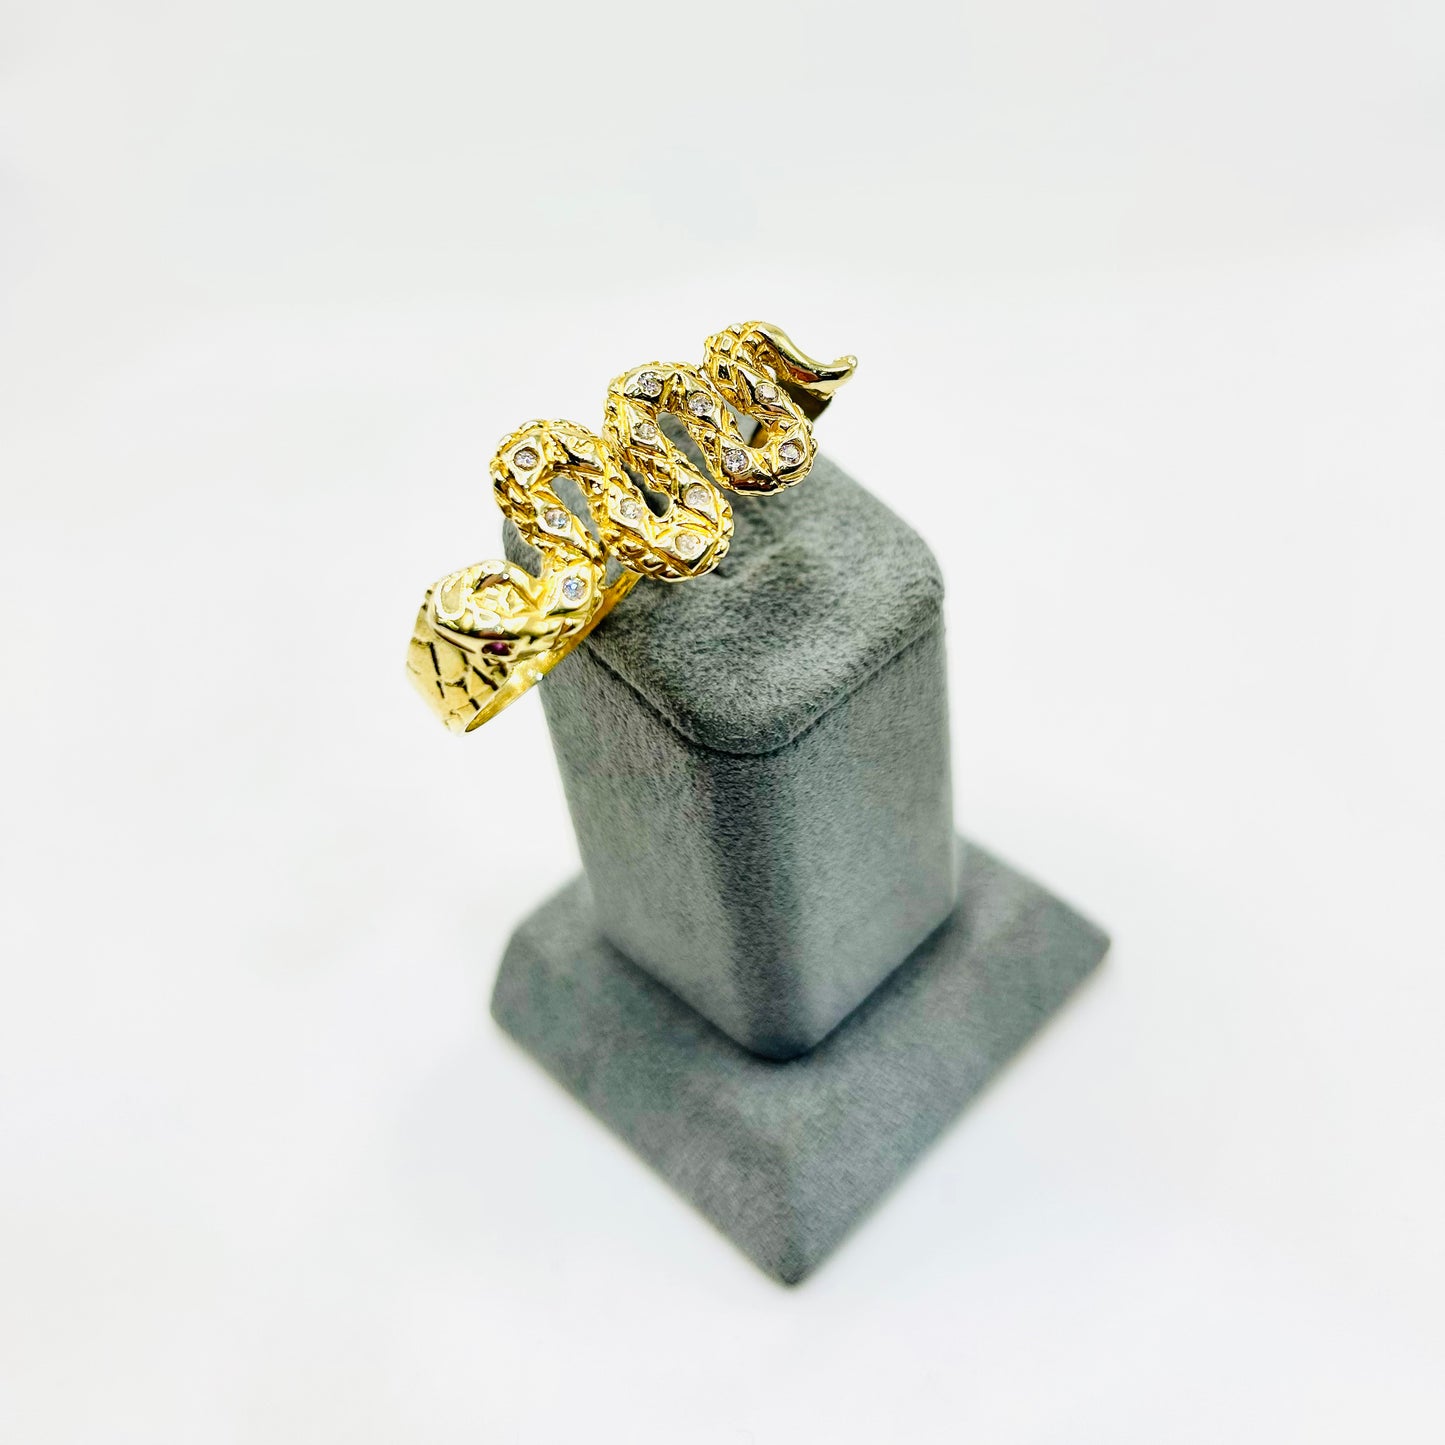 10K Gold 2-Finger Snake Ring with CZ